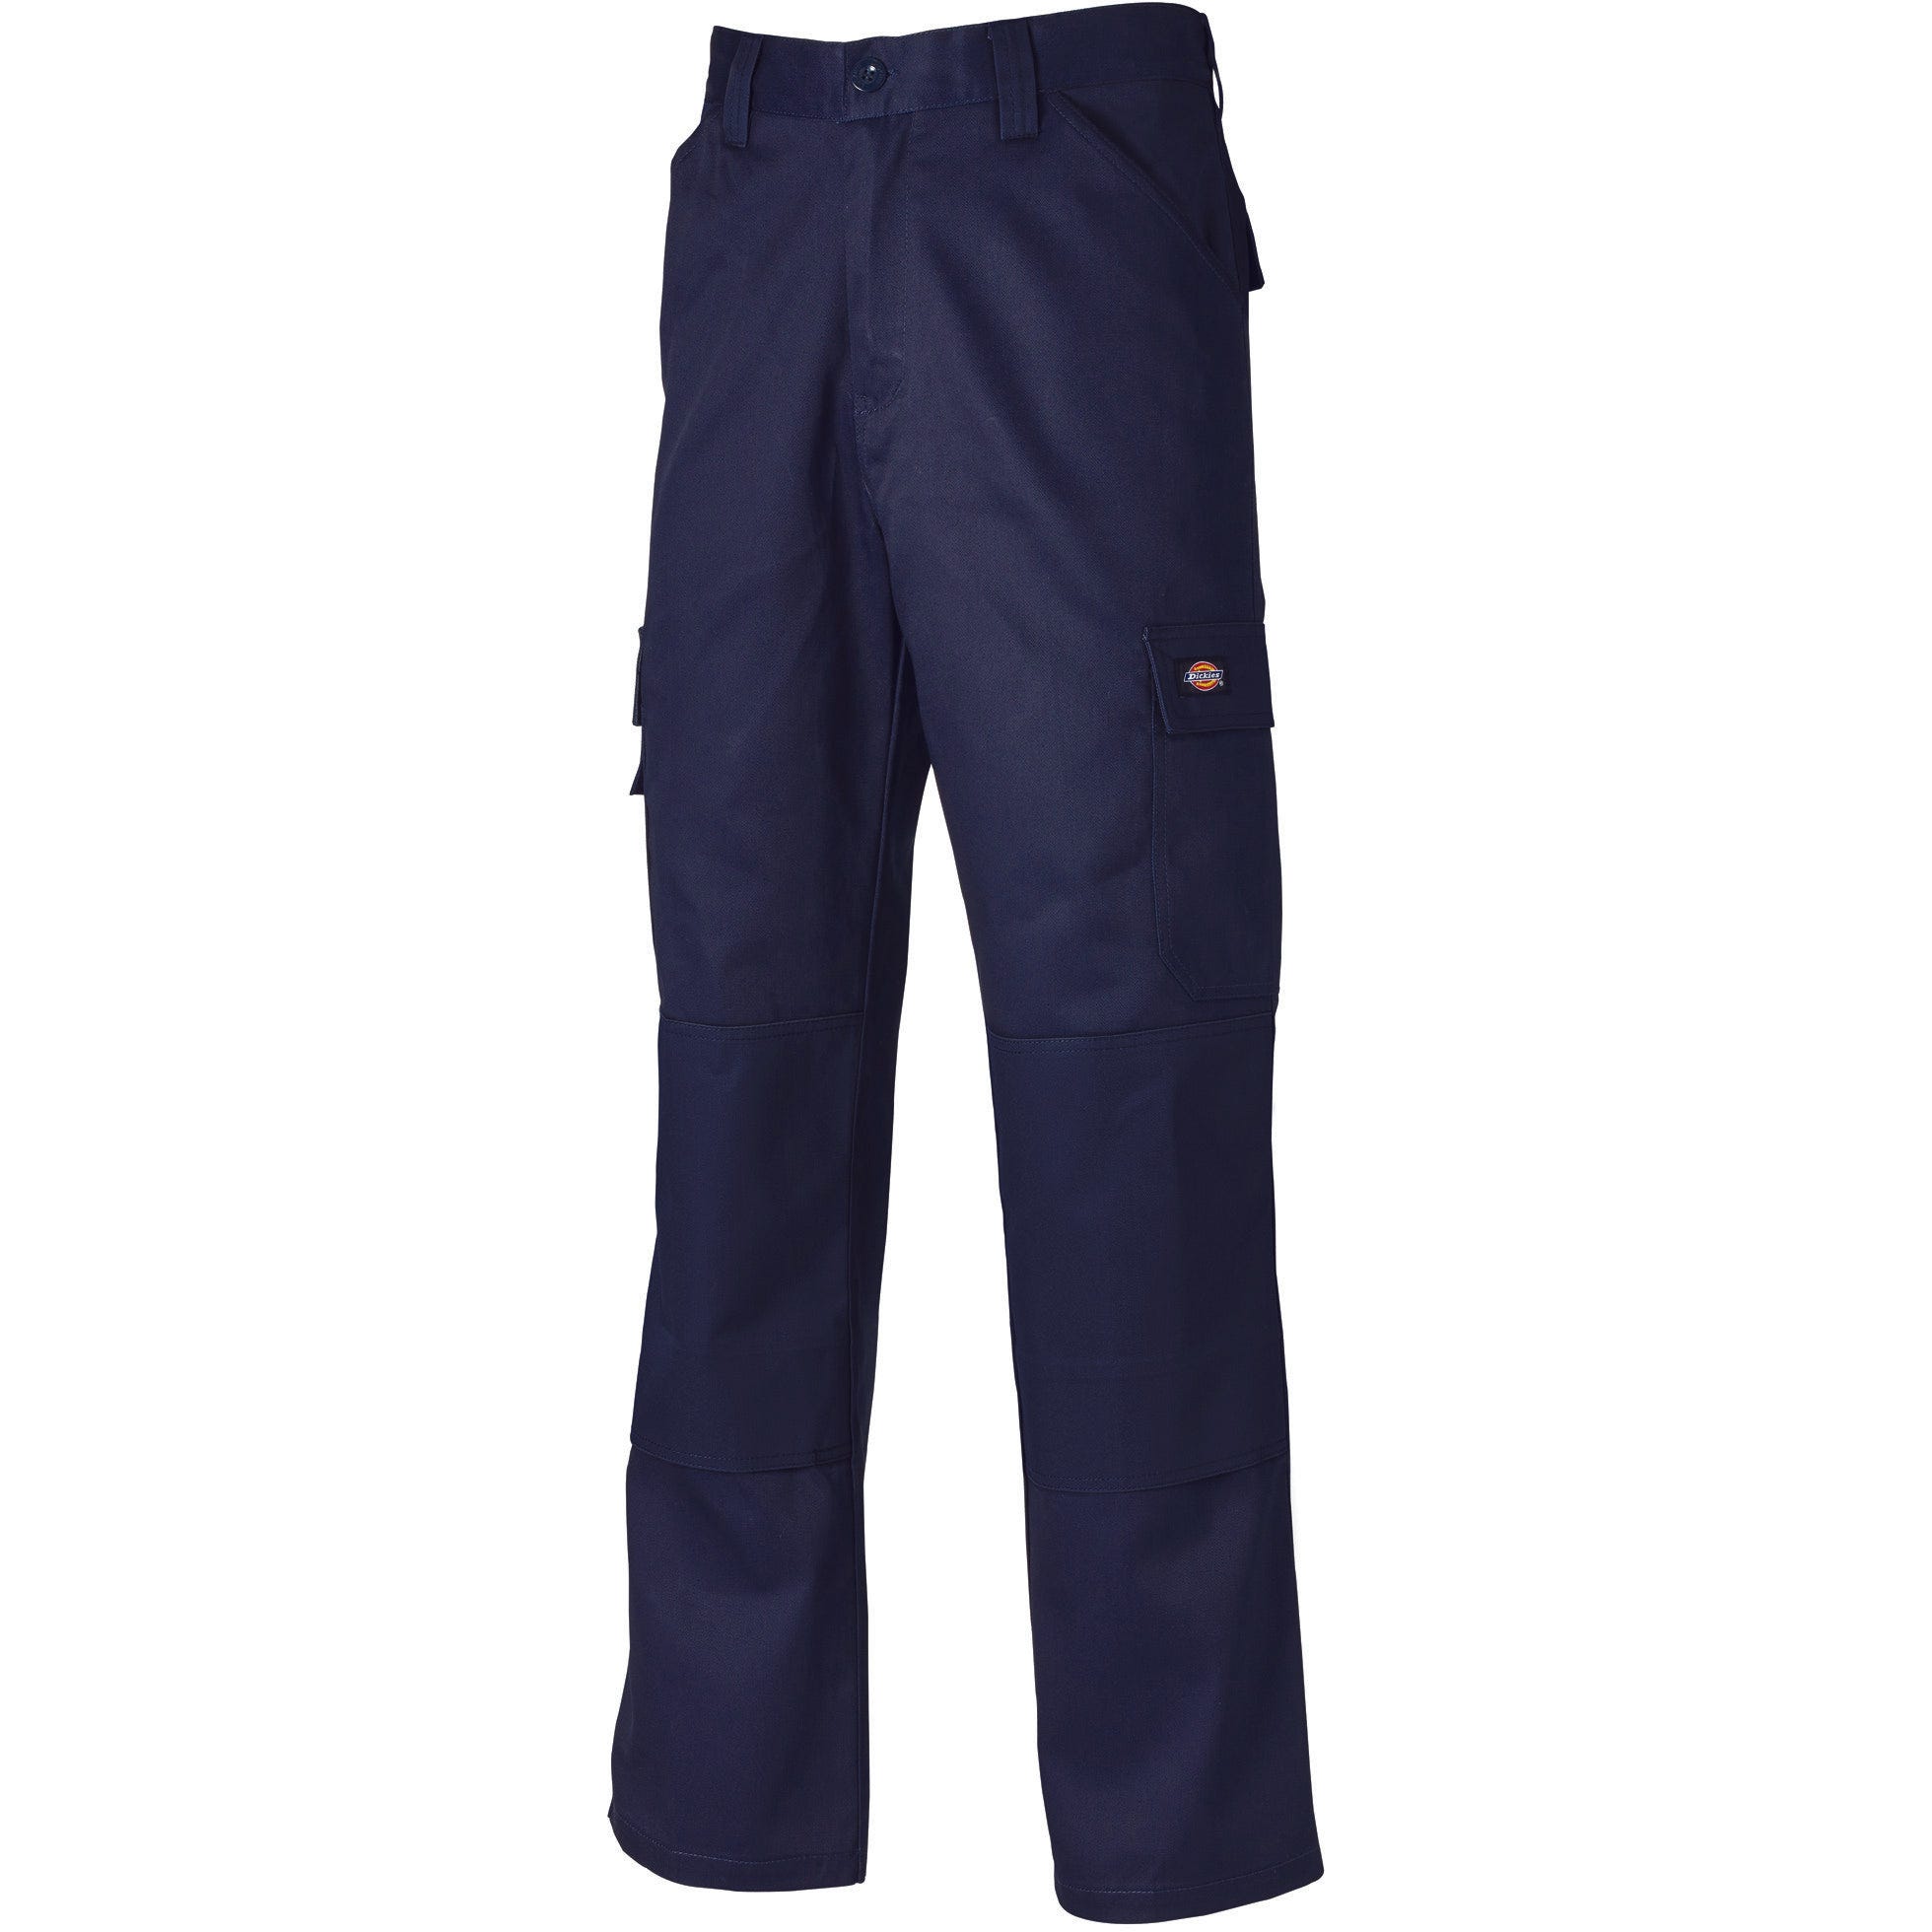 Pantalon Everyday Bleu marine - Dickies - Taille 46 5